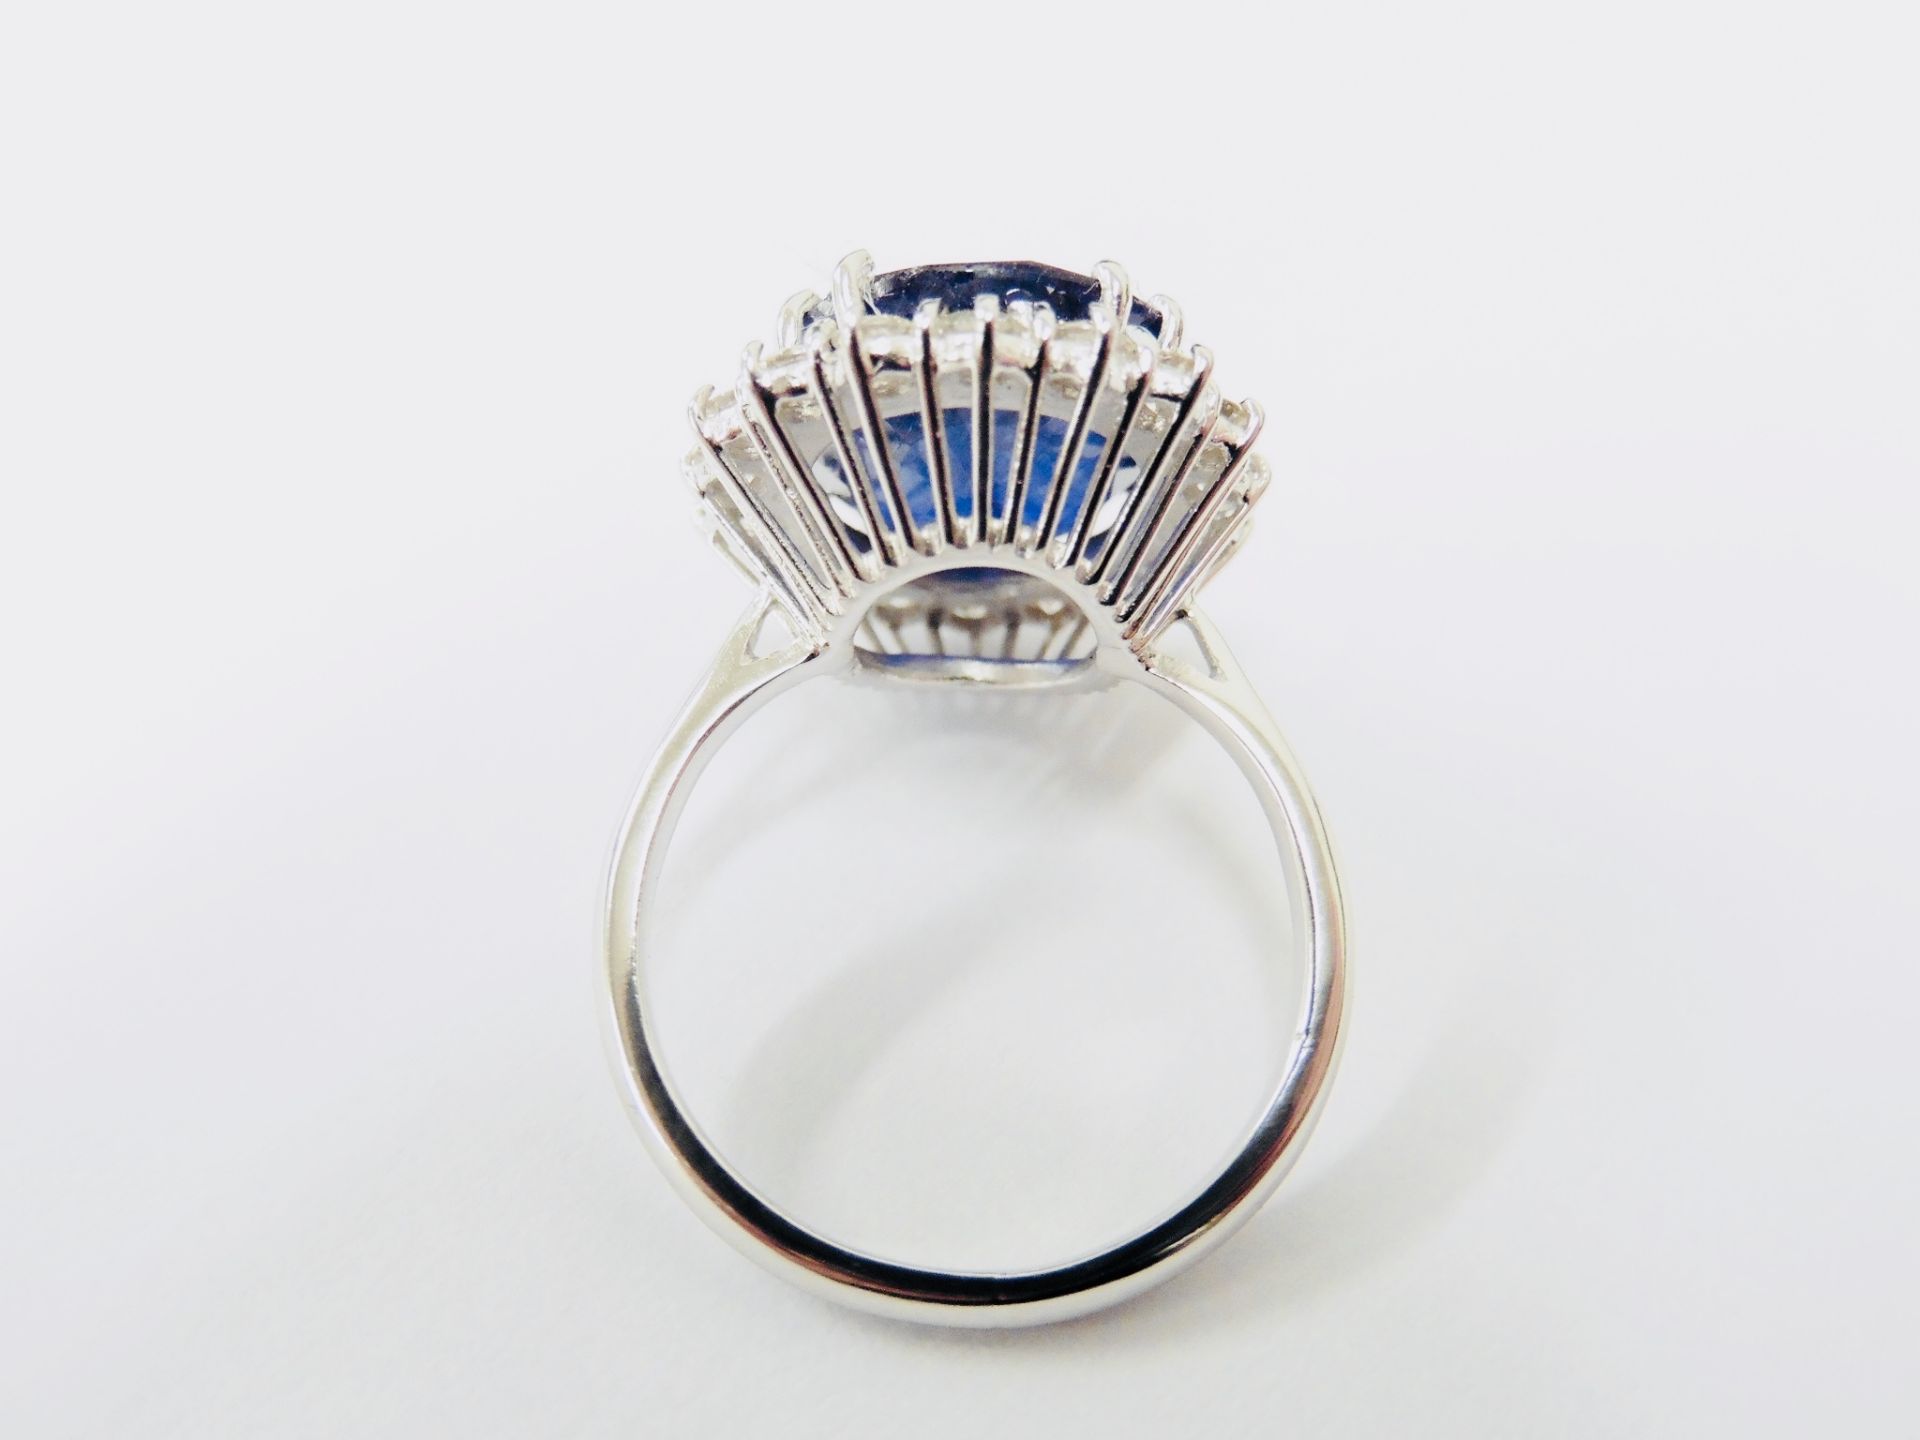 9ct Sapphire Diamond cluster ring,9ct sapphire natural(treated),1.30ct brilliant cut diamonds si2 - Image 5 of 6